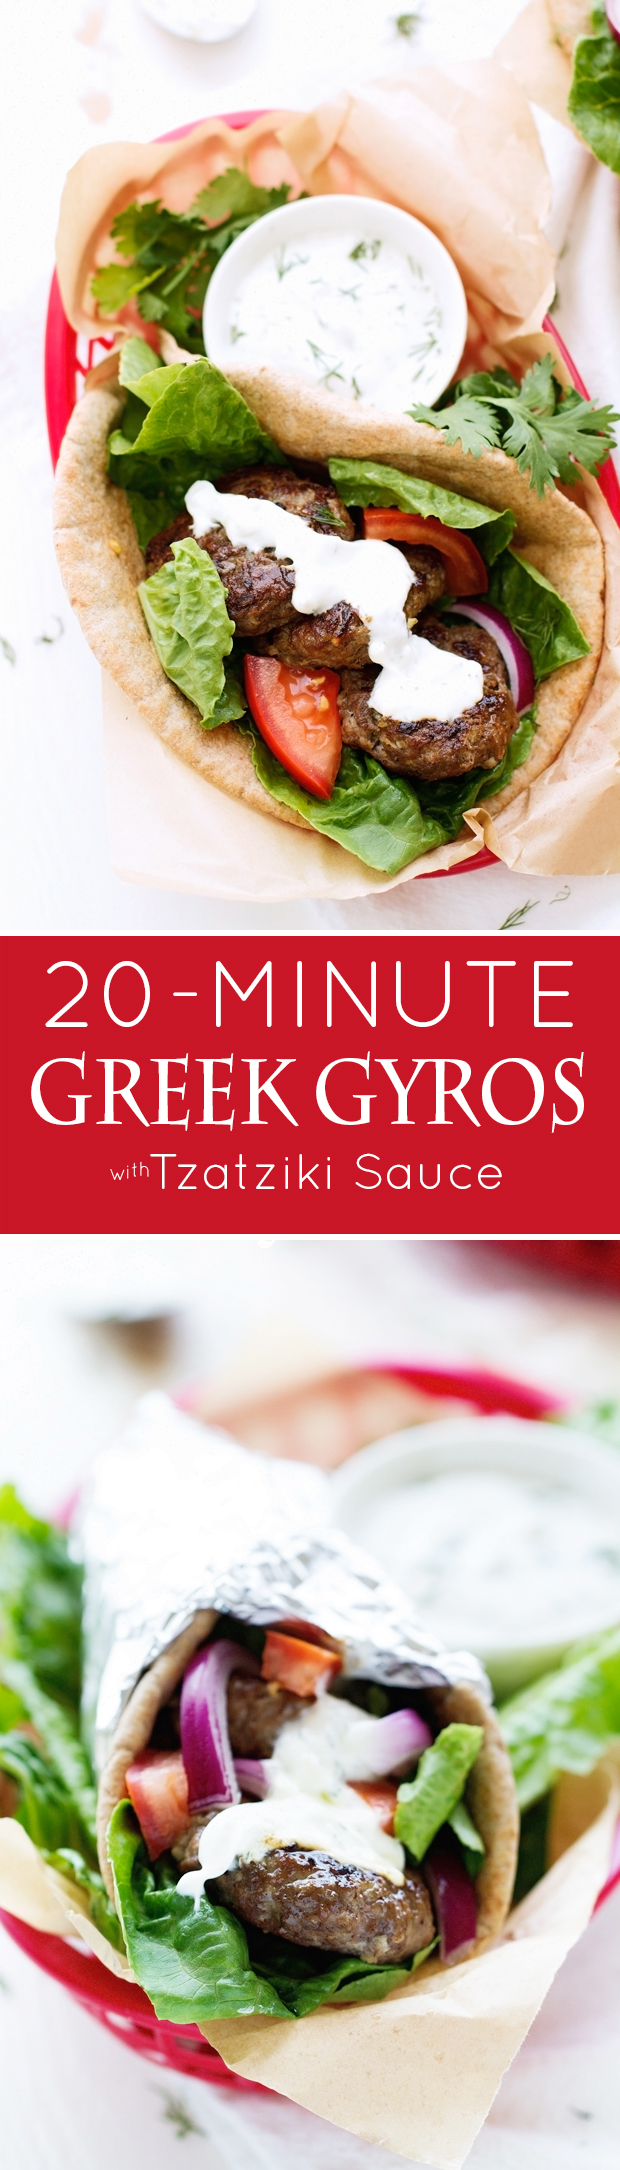 20 Minute Greek Gyros with Tzatziki Sauce - A GREEK classic turned into a QUICK + EASY Weeknight dinner! #gyros #greekgryos #chickengryos | Littlespicejar.com